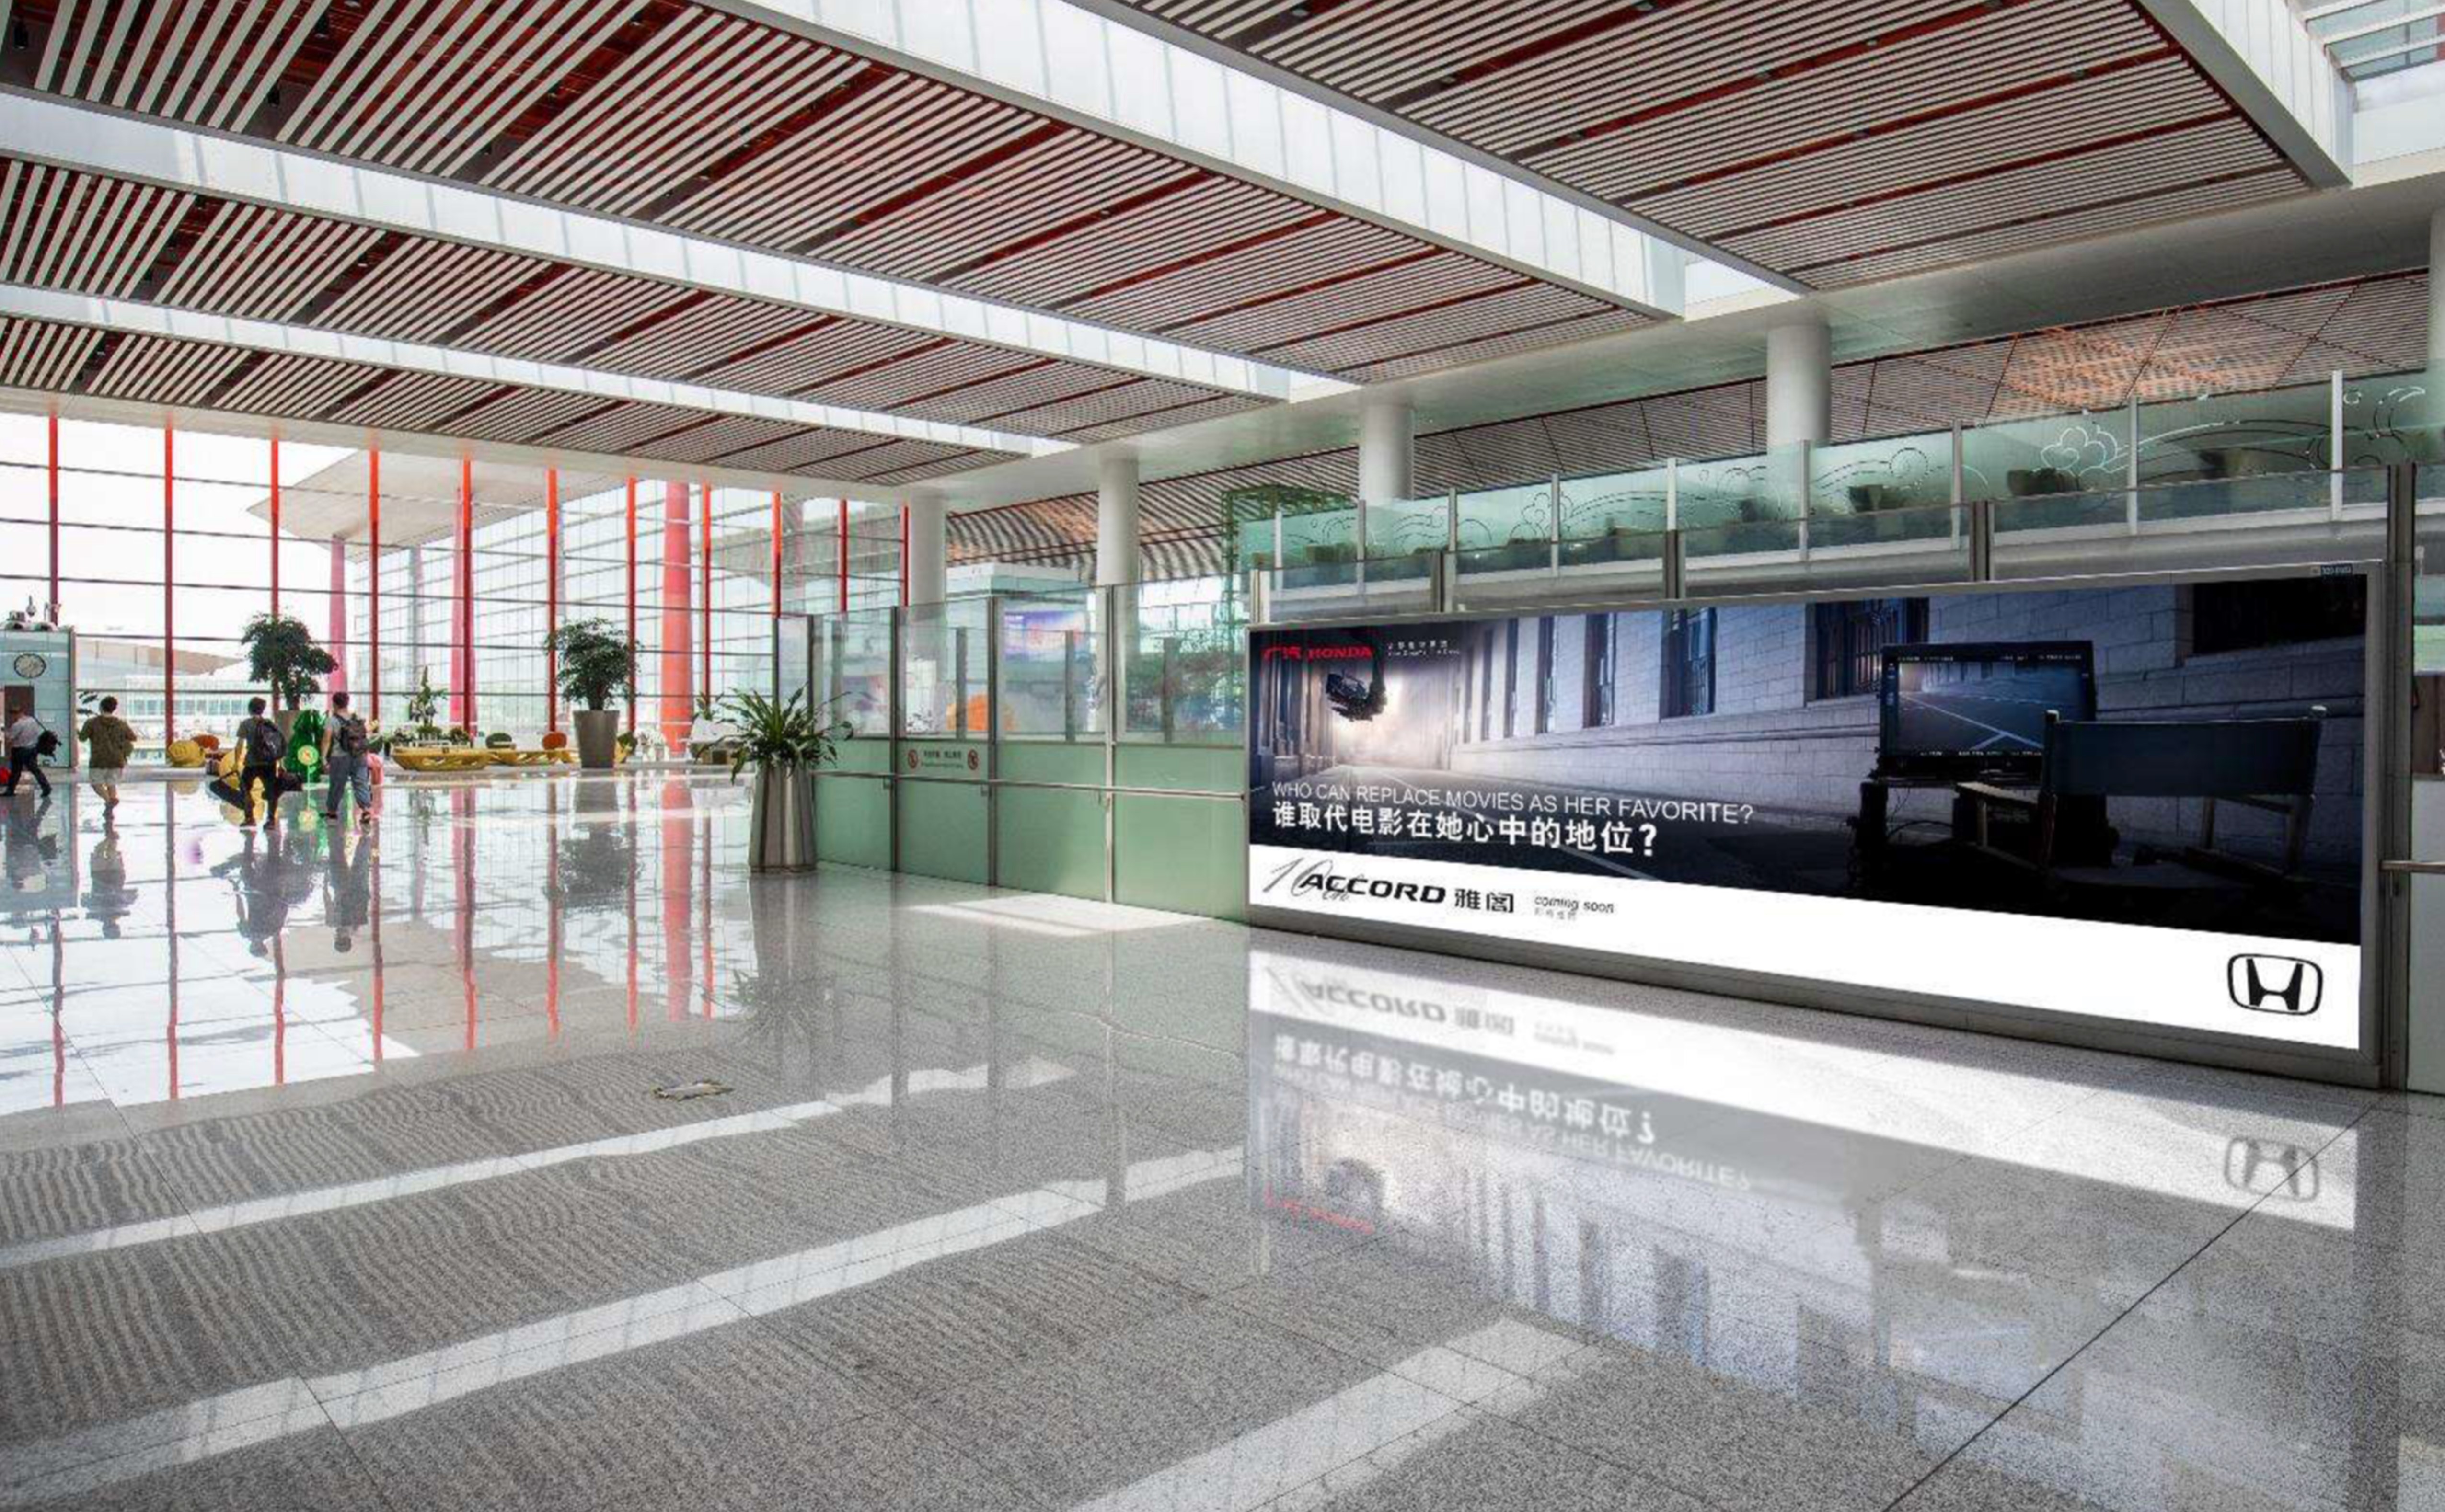 T3D lightbox advertisement at Capital Airport